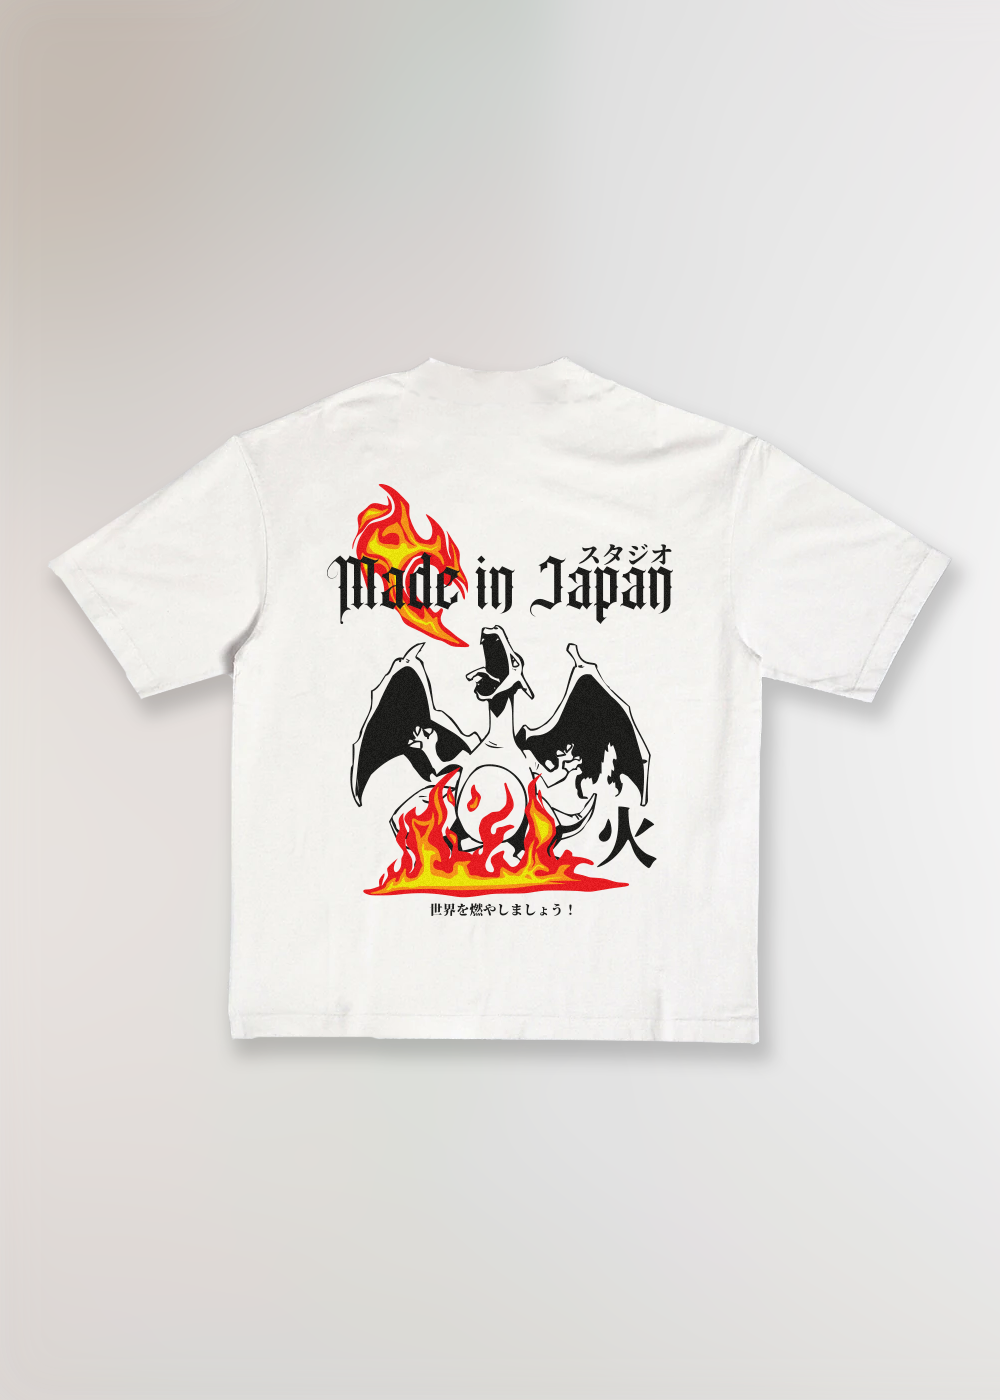 MADE IN JAPAN - BURN® WHITE T-SHIRT